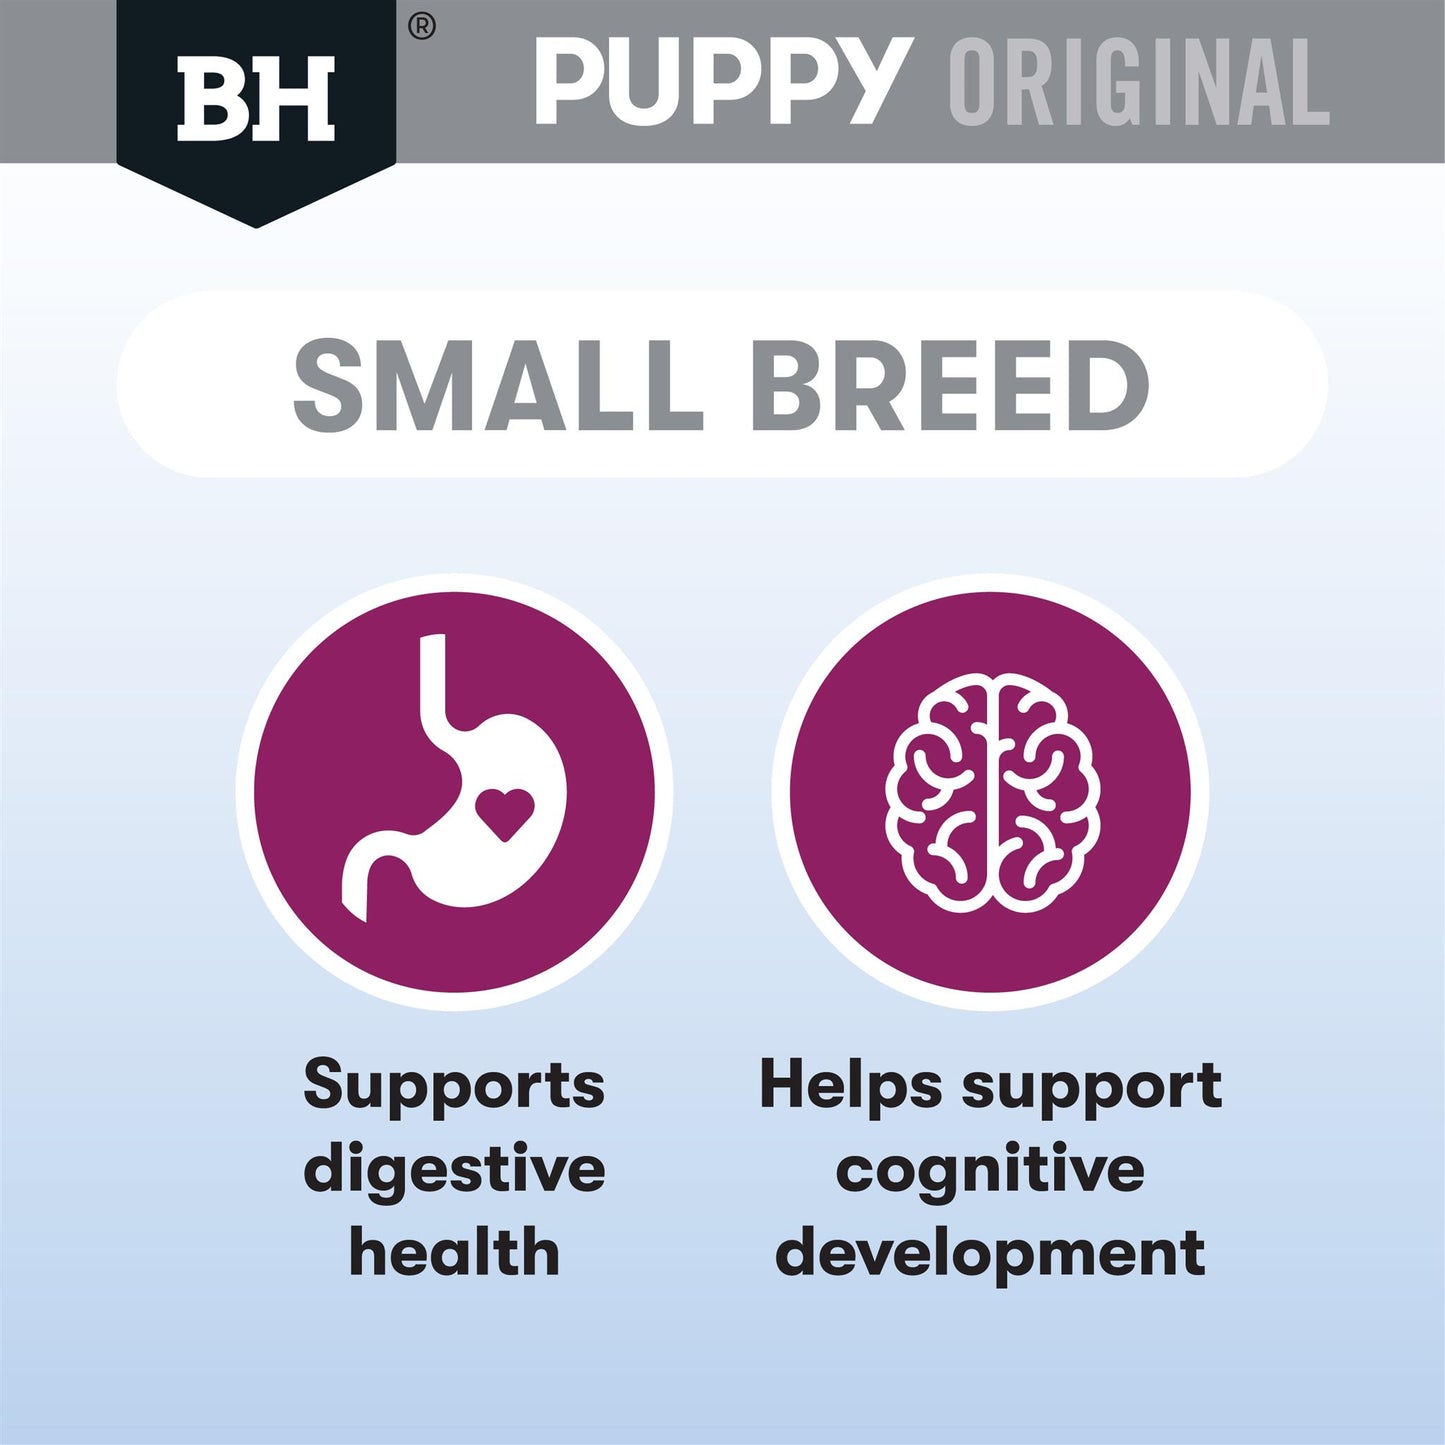 BlackHawk: Puppy Small Breed Lamb & Rice